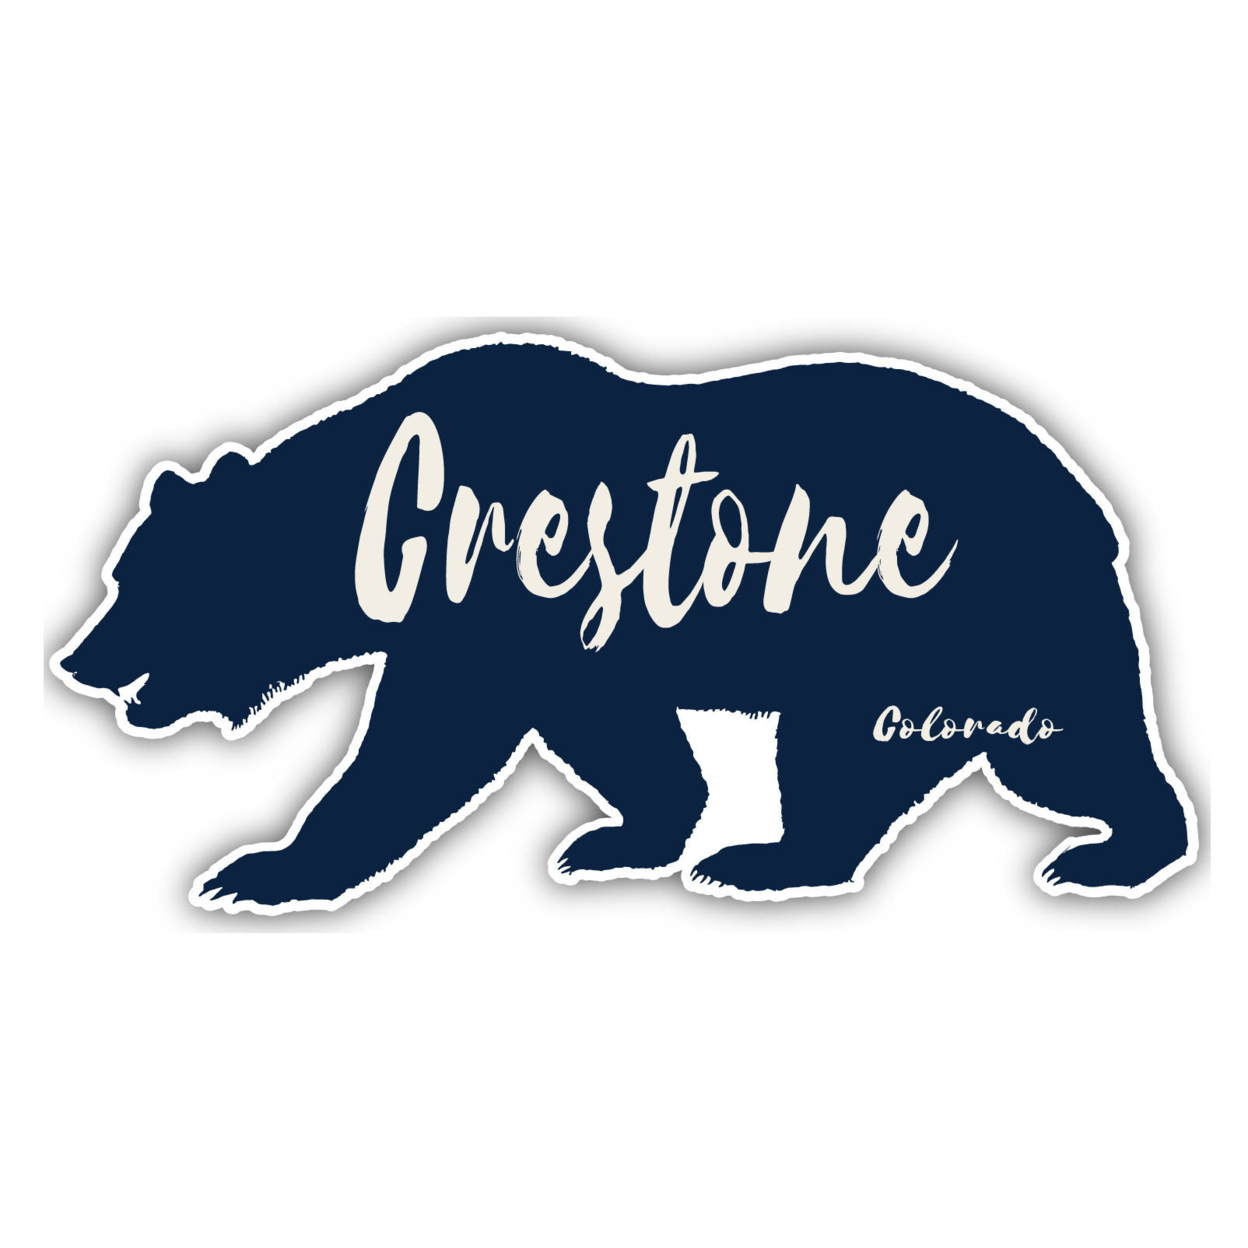 Crestone Colorado Souvenir Decorative Stickers (Choose Theme And Size) - Single Unit, 2-Inch, Camp Life